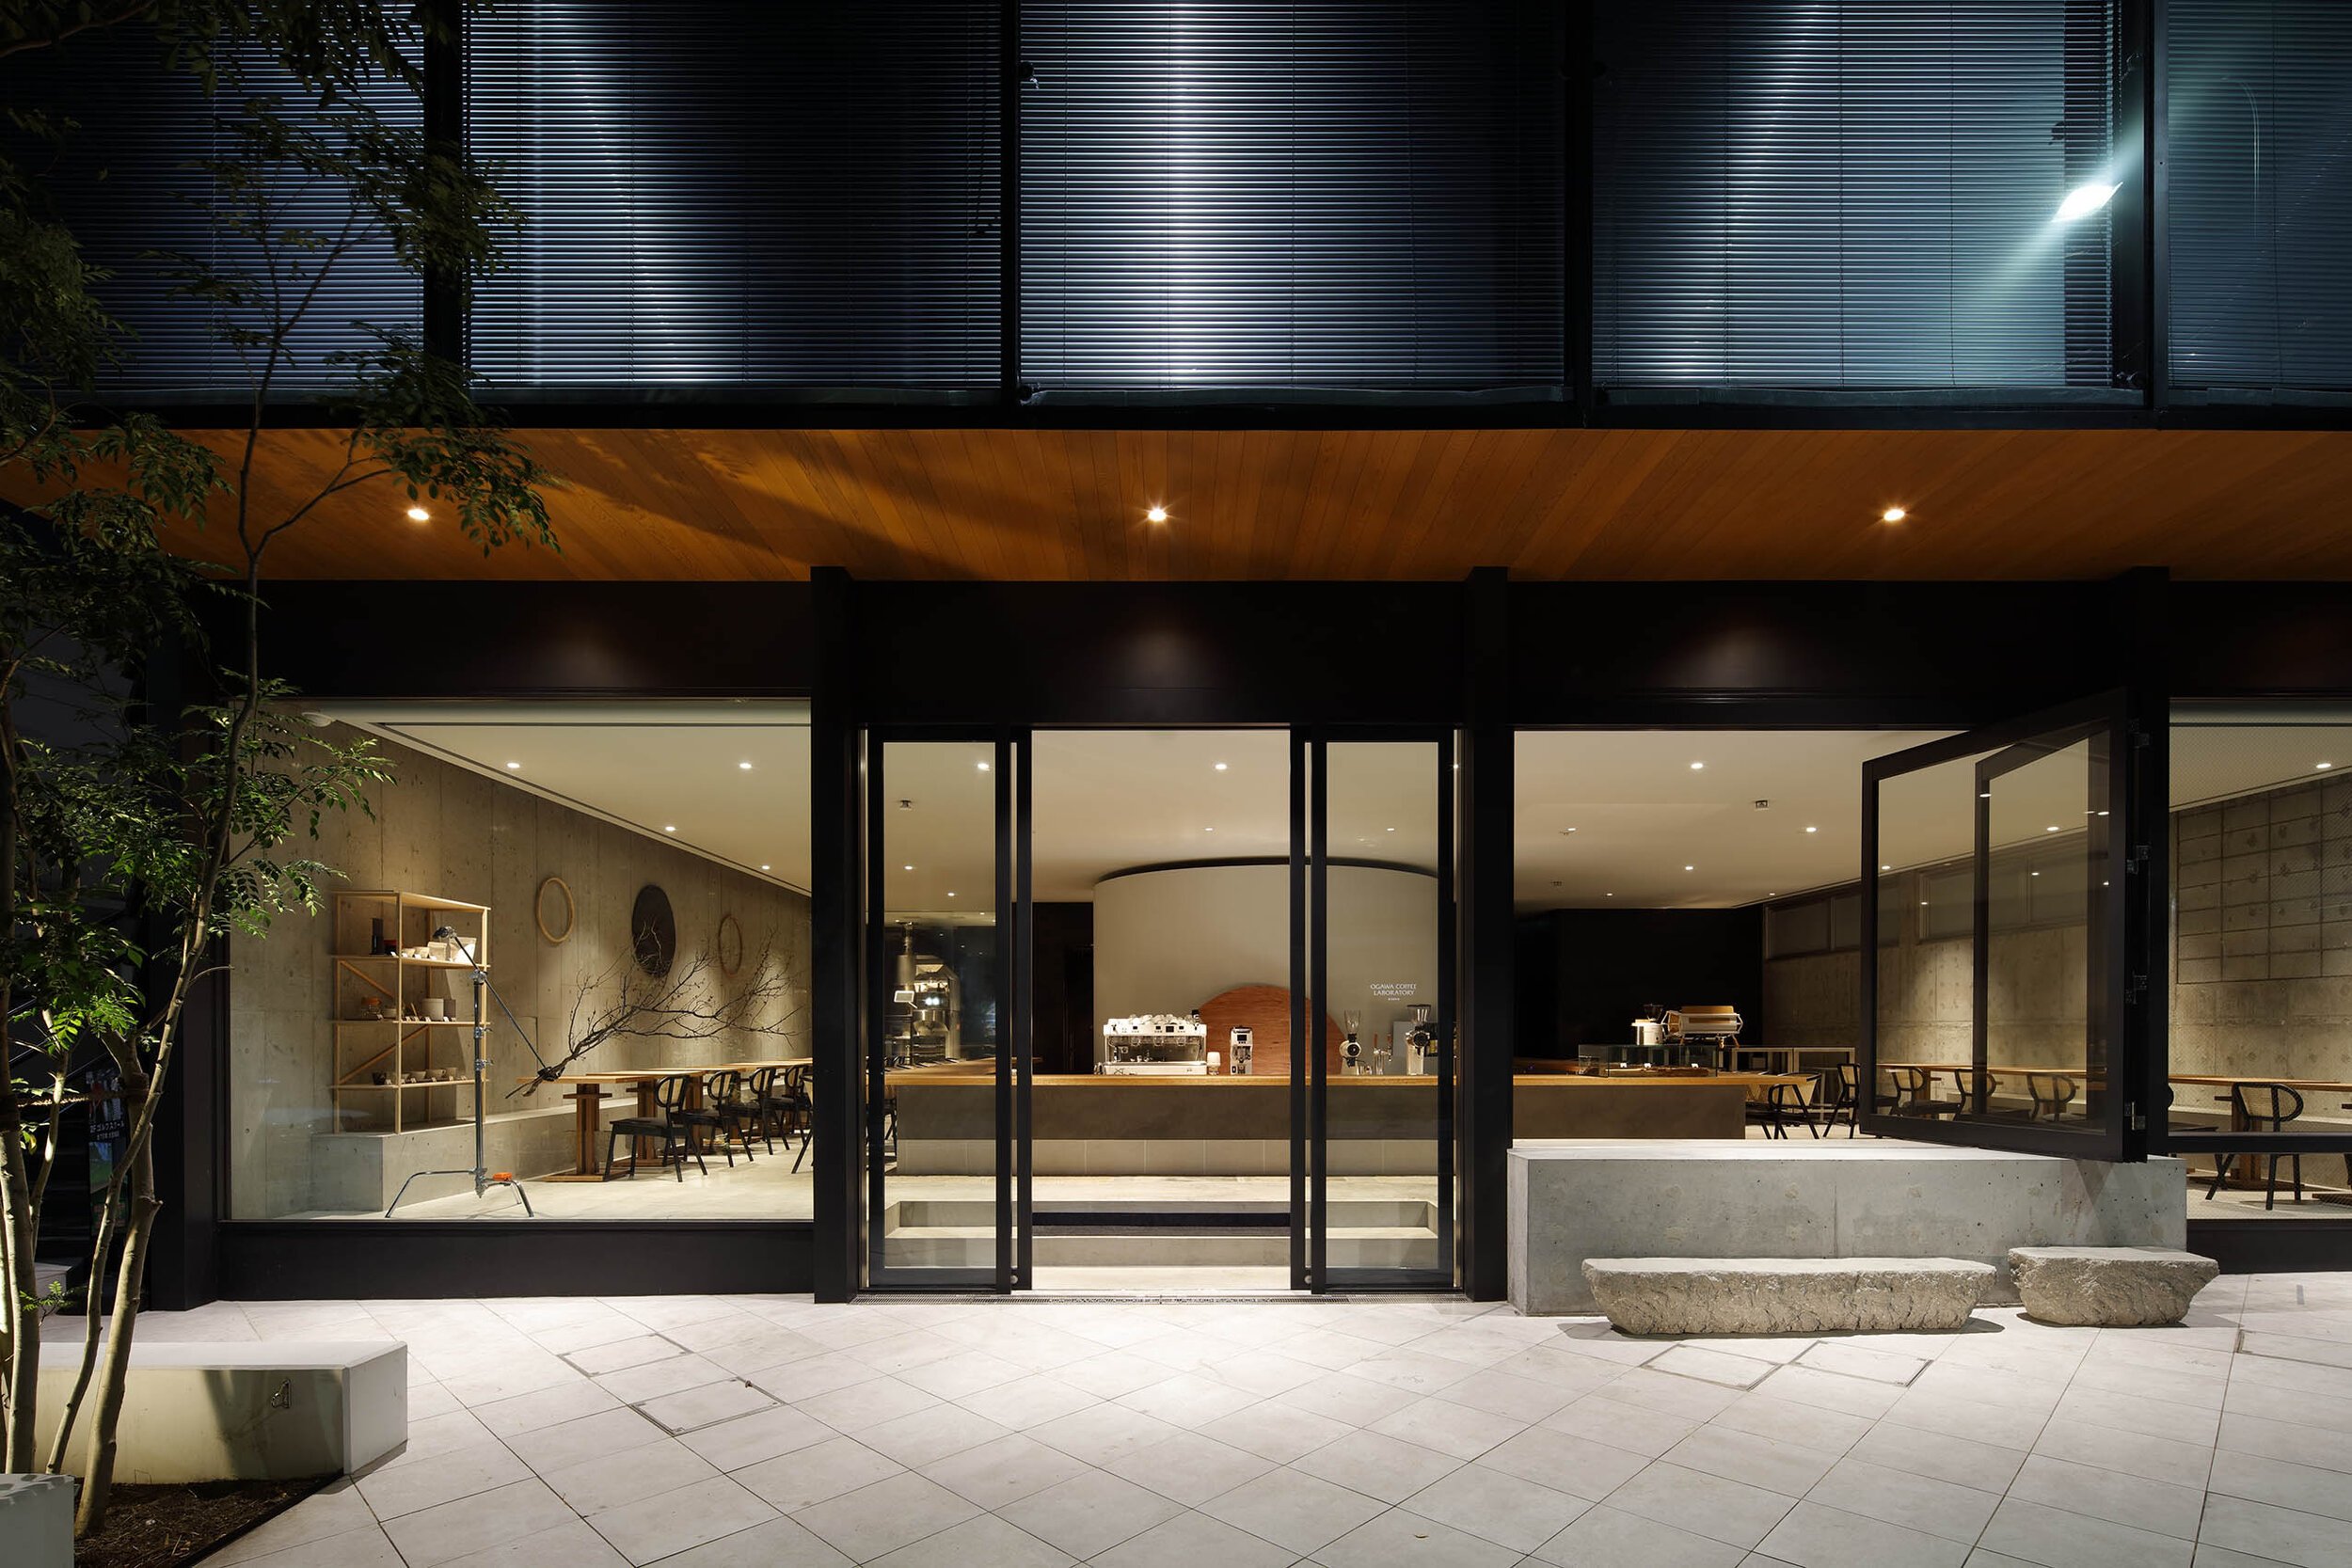  Yusuke Seki Studioの関祐介がデザインしたカフェOgawa Coffee Laboratoryの外観全景 